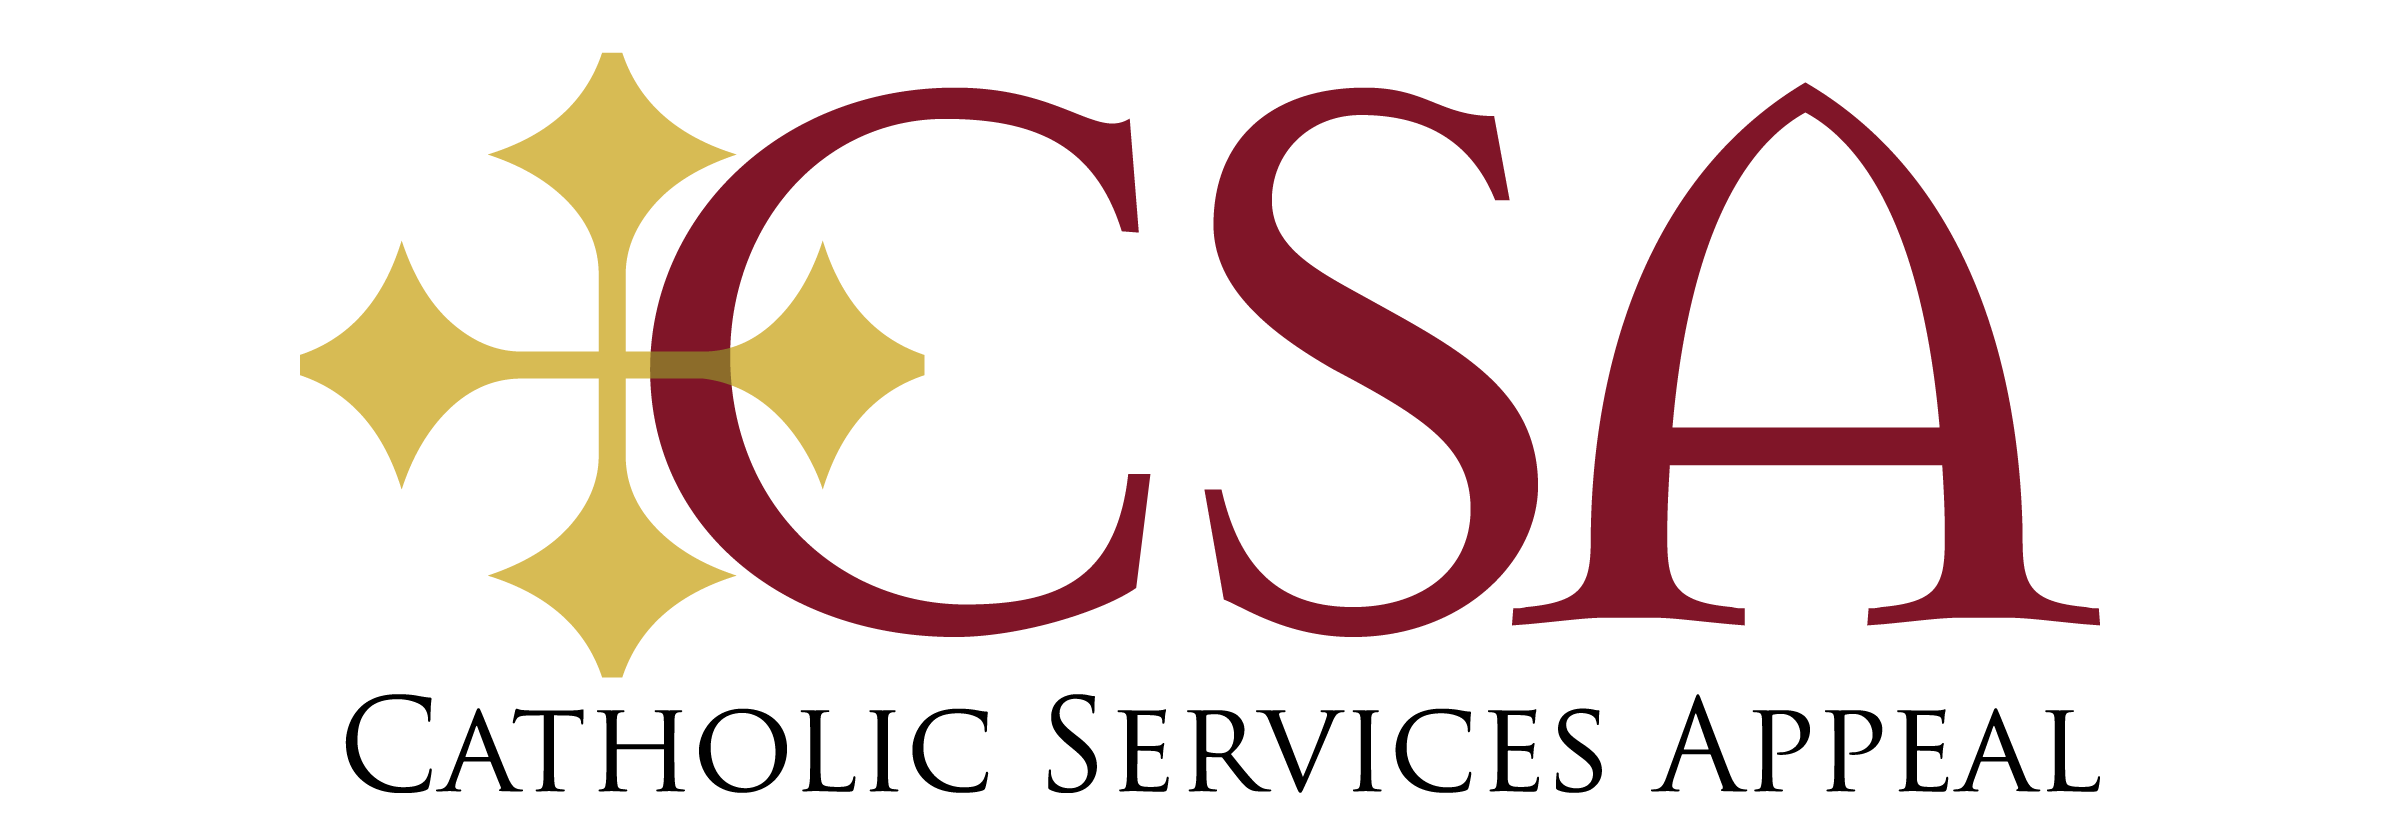 CSA Logo - Resources